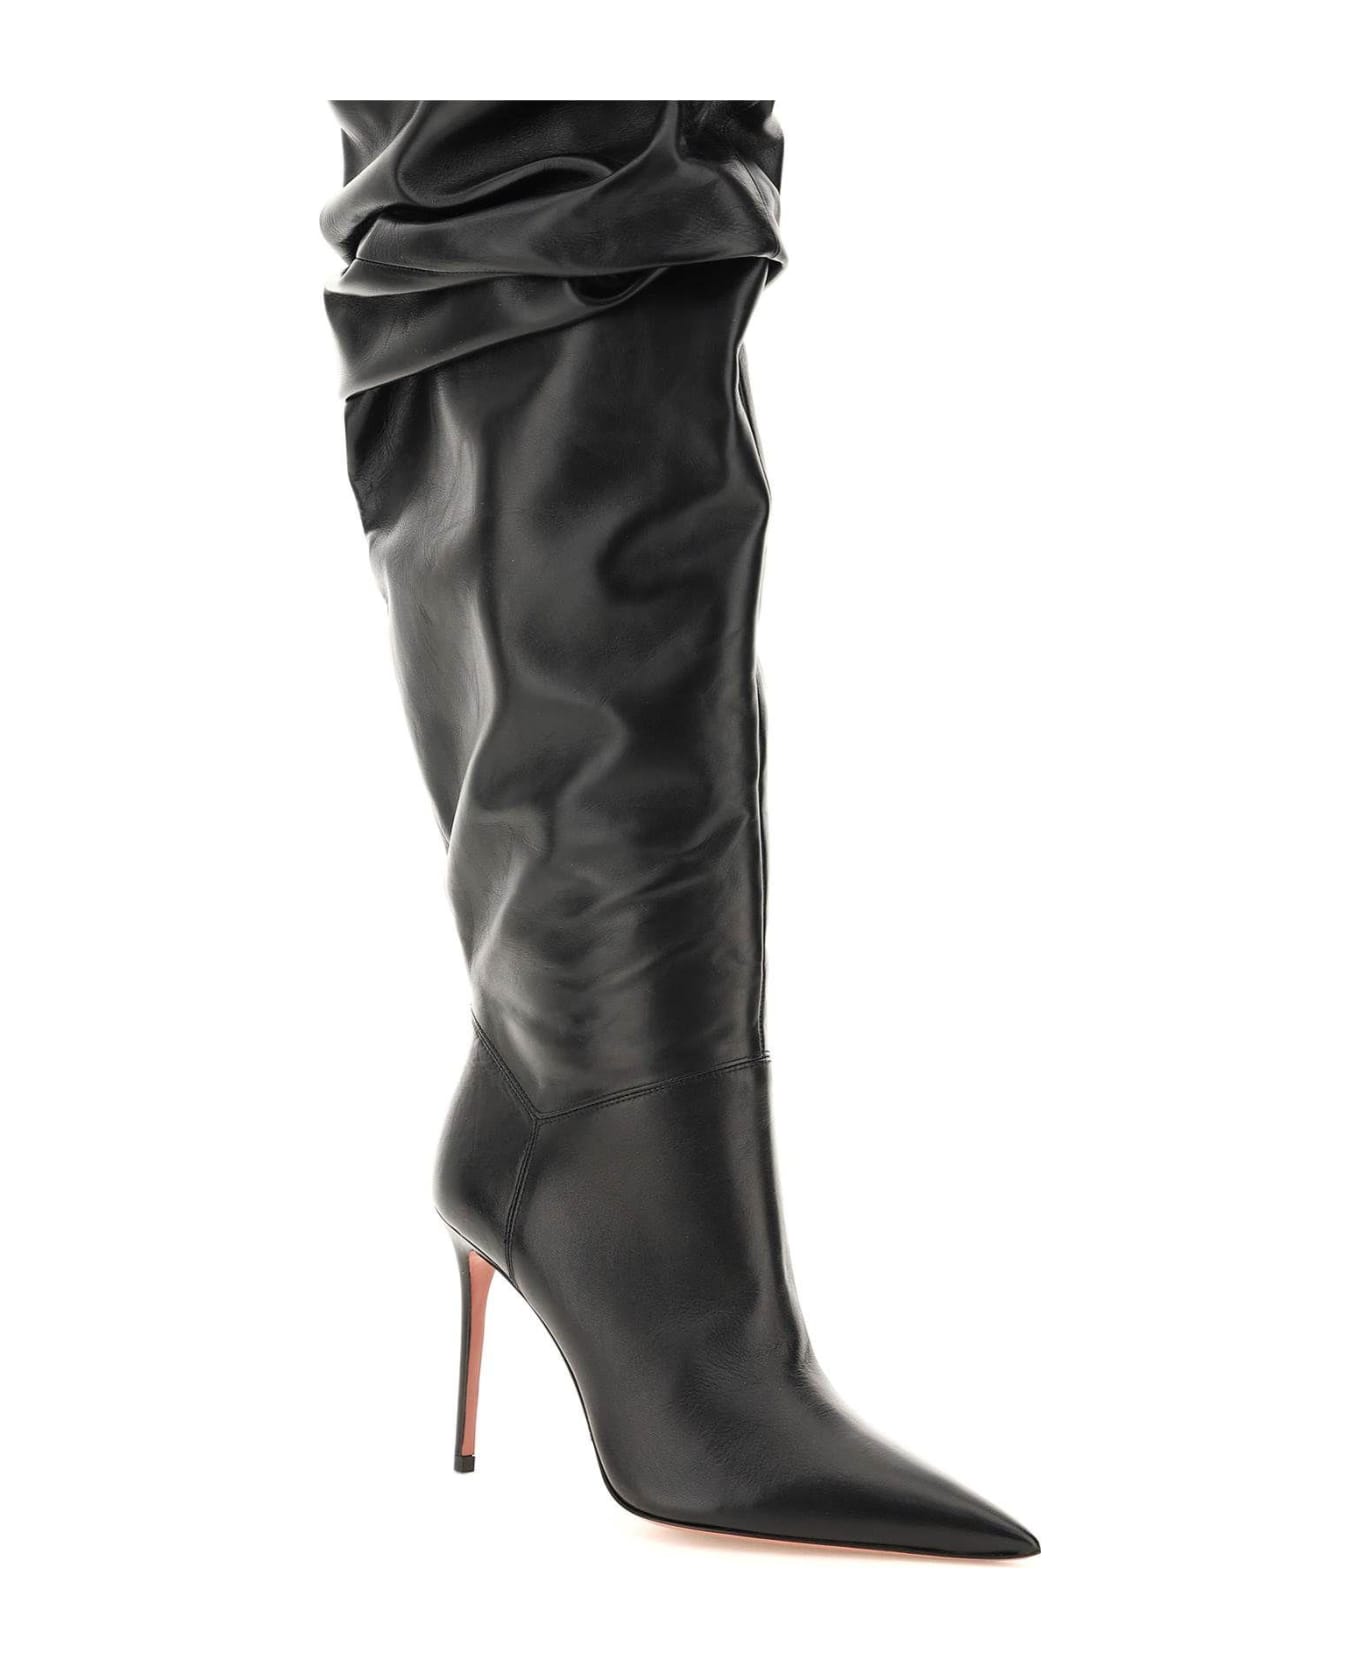 Amina Muaddi Jahleel Thigh-high Boots - Black